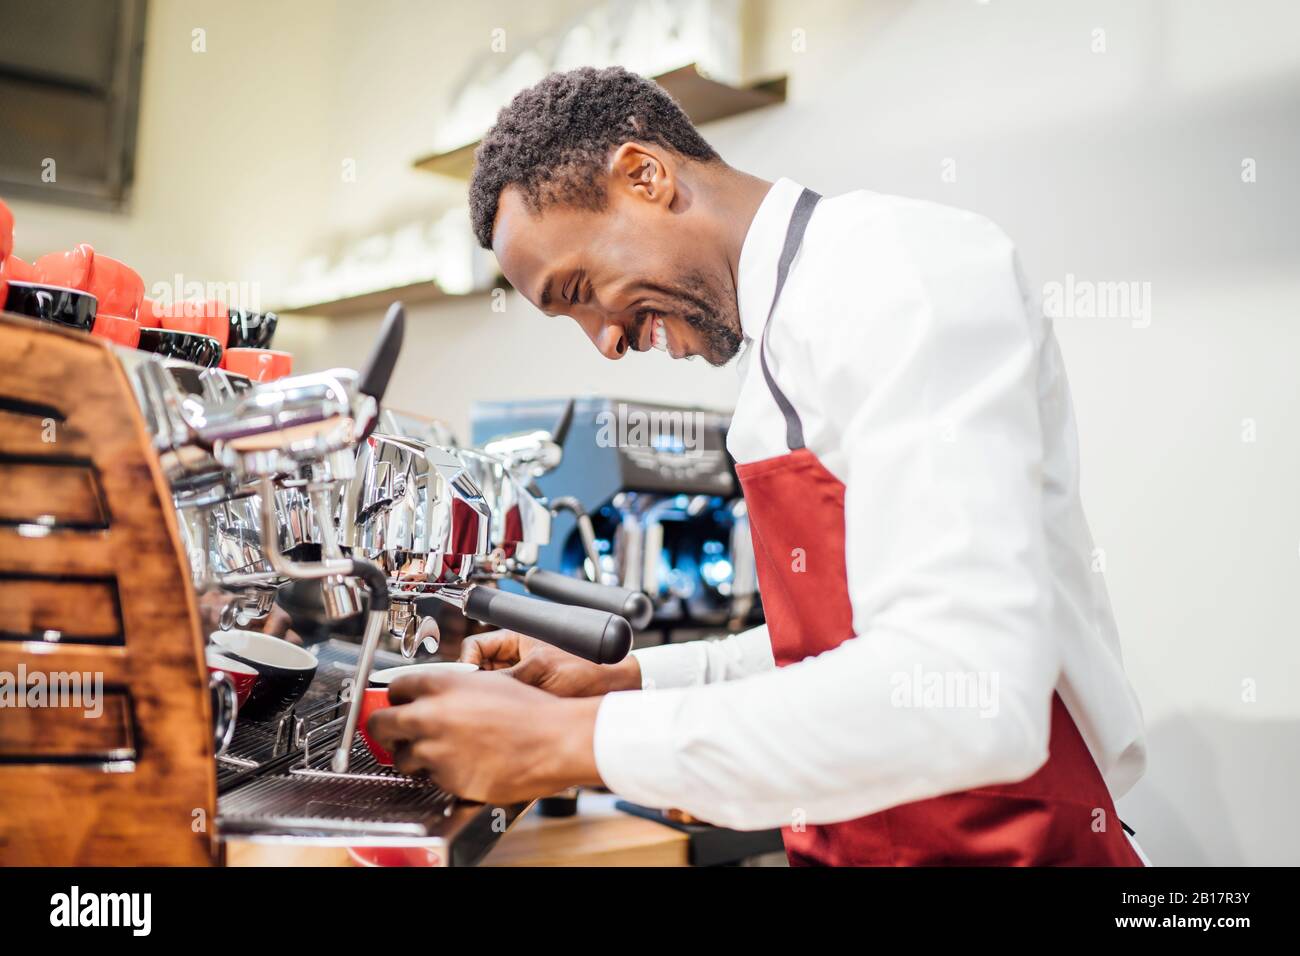 Smiling barista preparing a coffee in a coffee shop Stock Photo